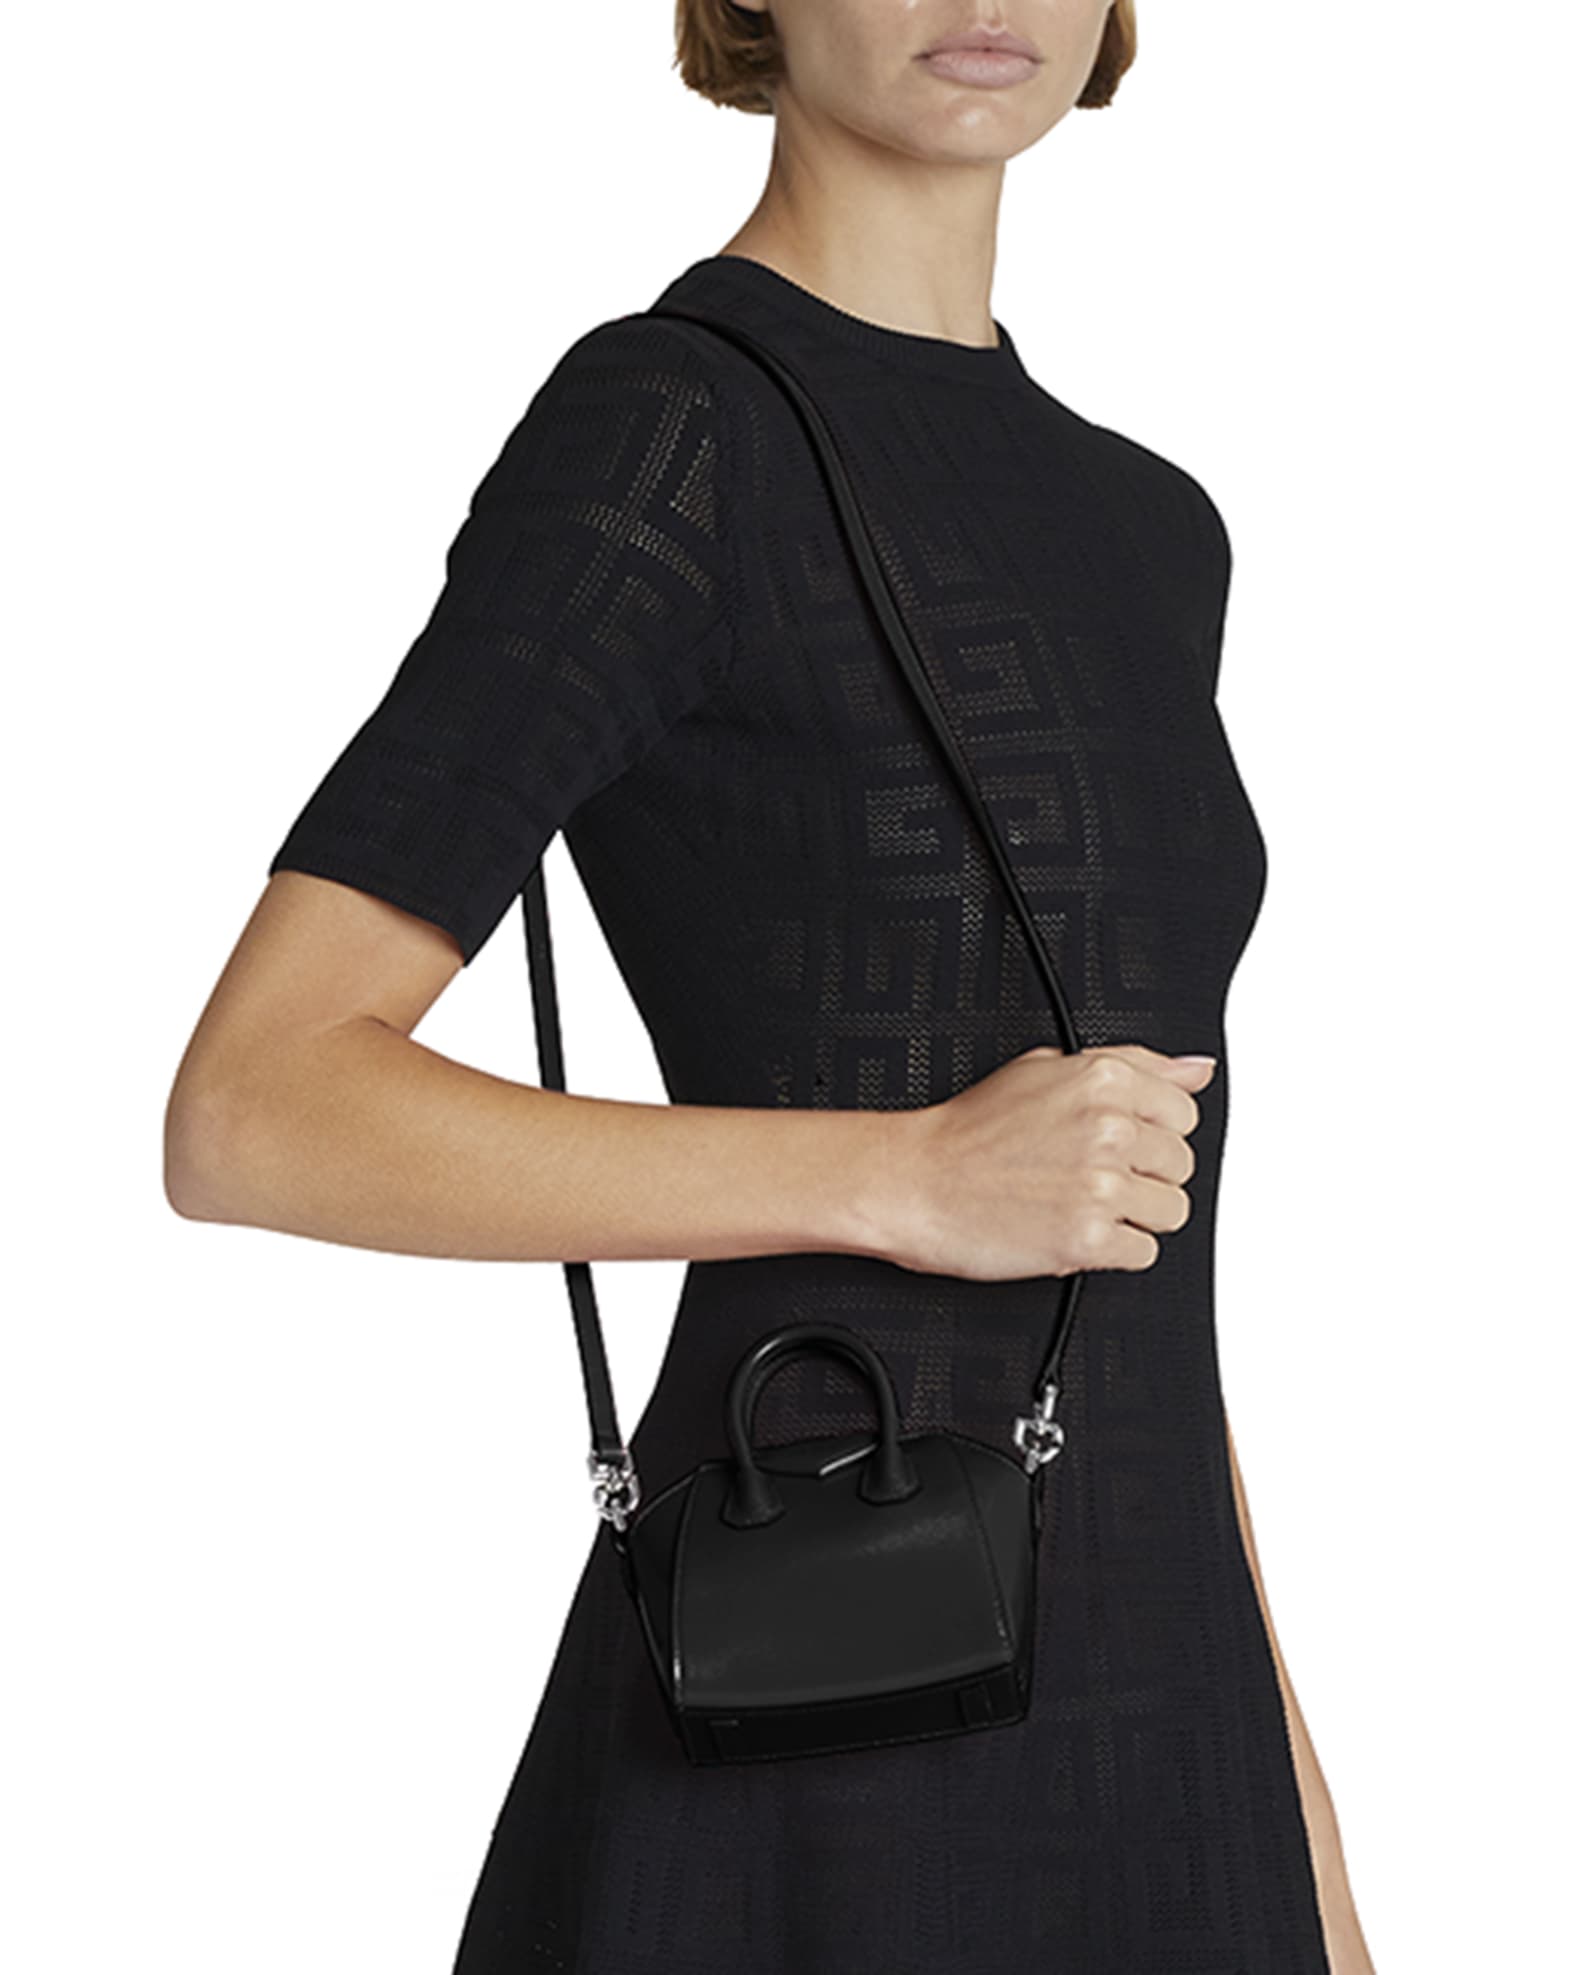 Givenchy Small Antigona Satchel Brown Leather Shoulder Bag - MyDesignerly